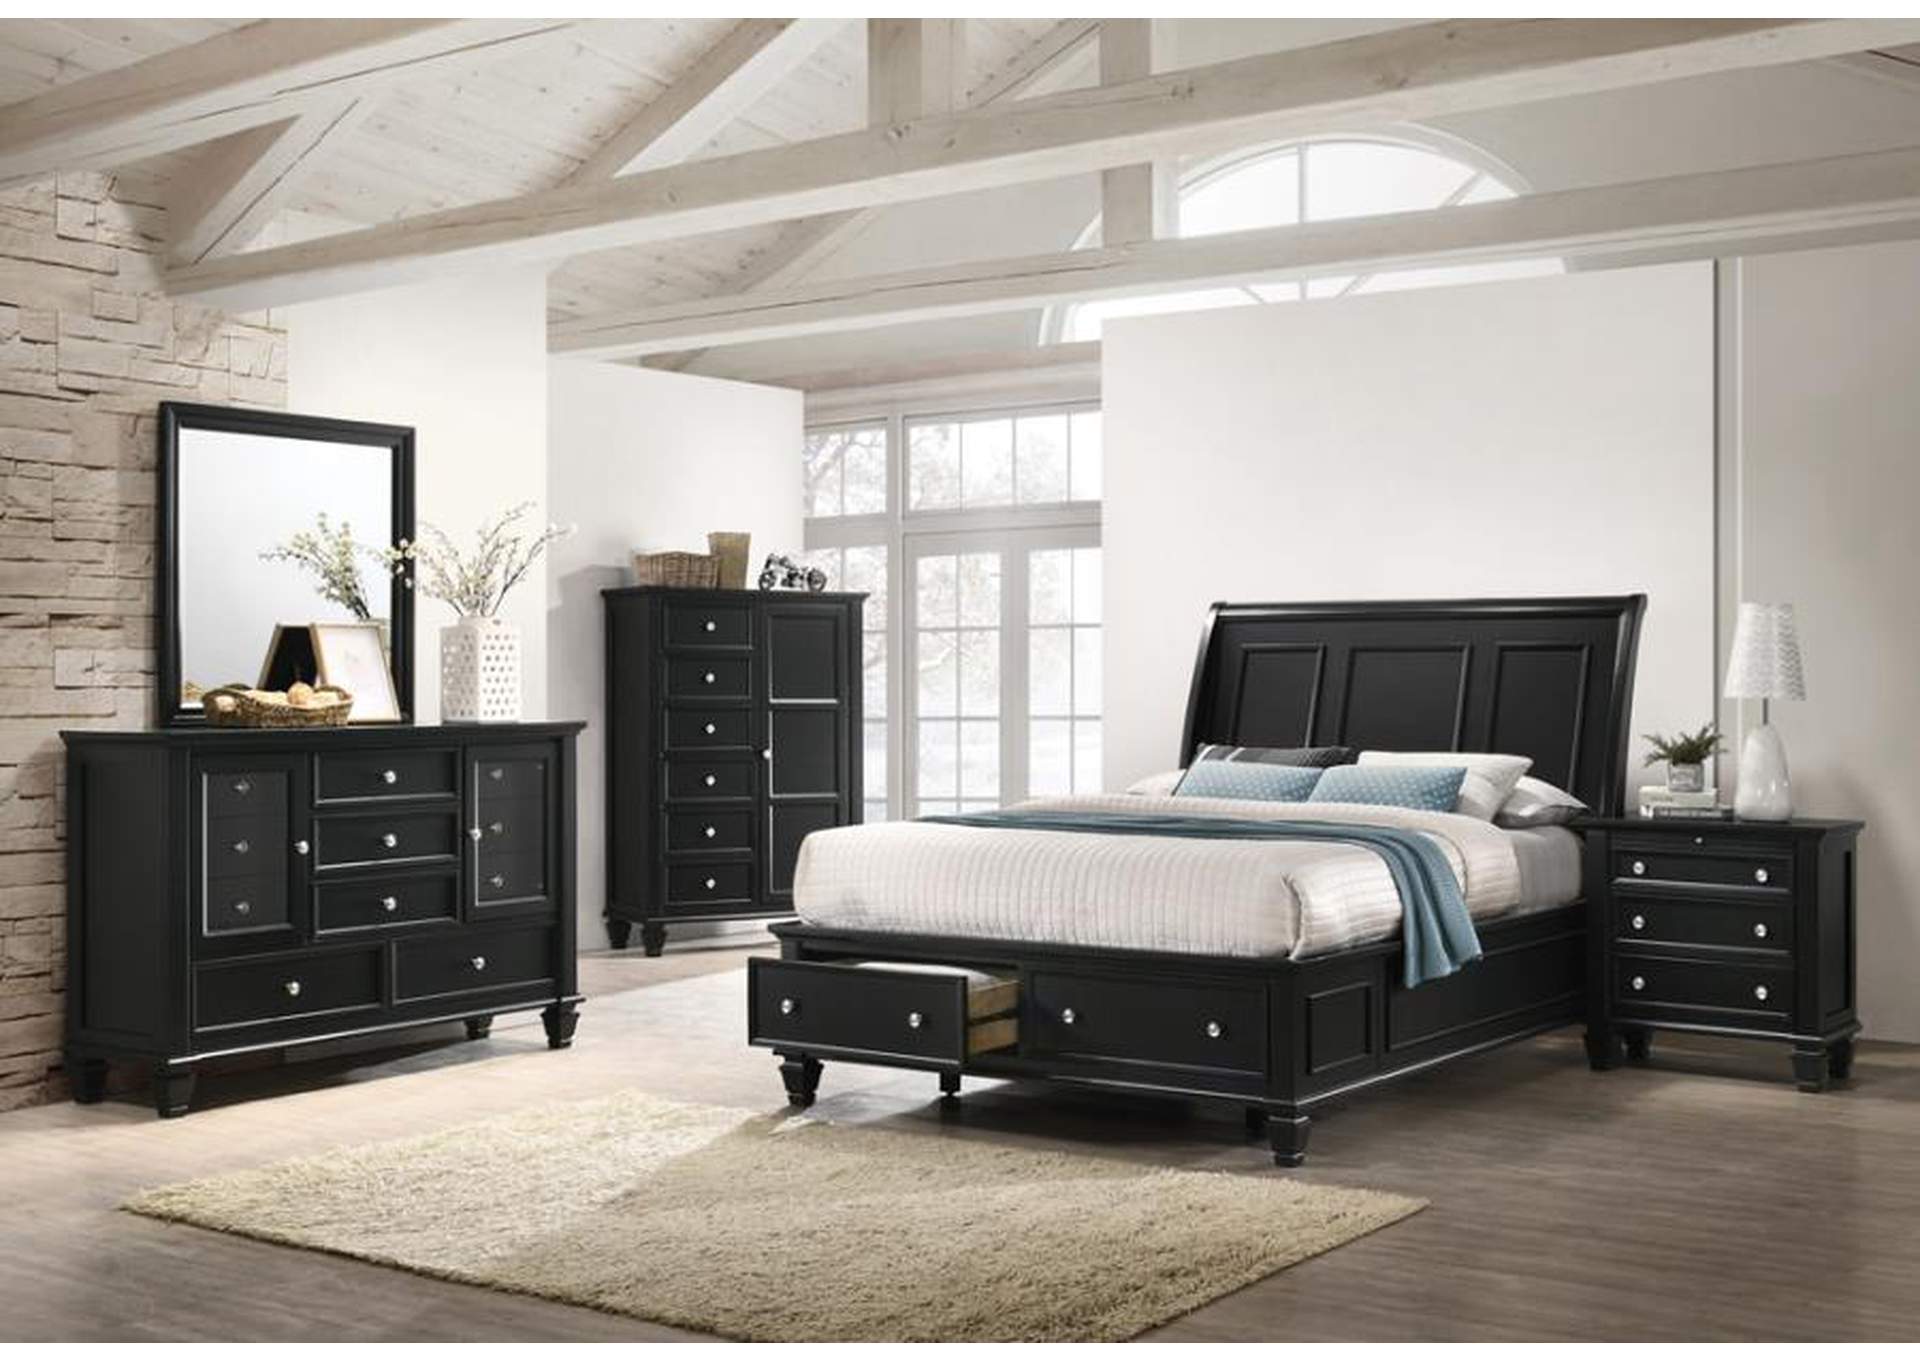 Sandy Beach Storage Bedroom Set With Sleigh Headboard,Coaster Furniture